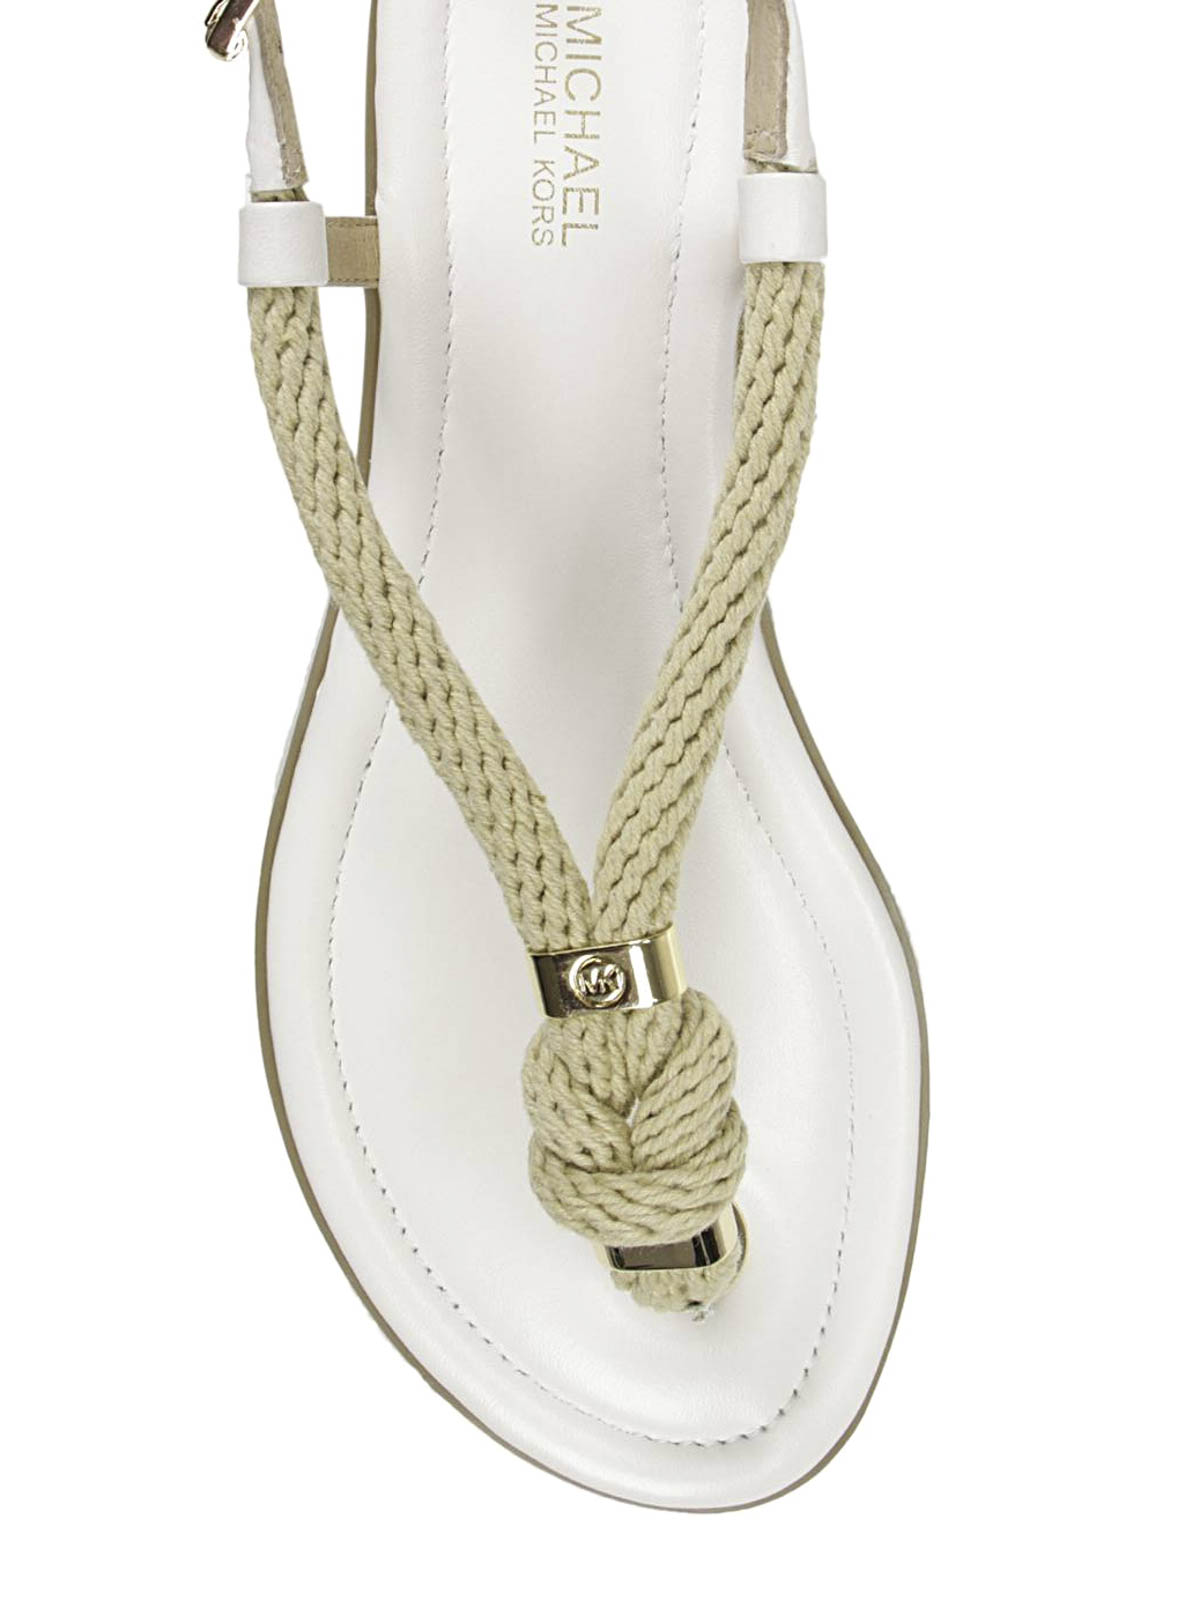 Sandals Michael Kors - Holly sandals - 40T5HOFA2L | Shop online at iKRIX